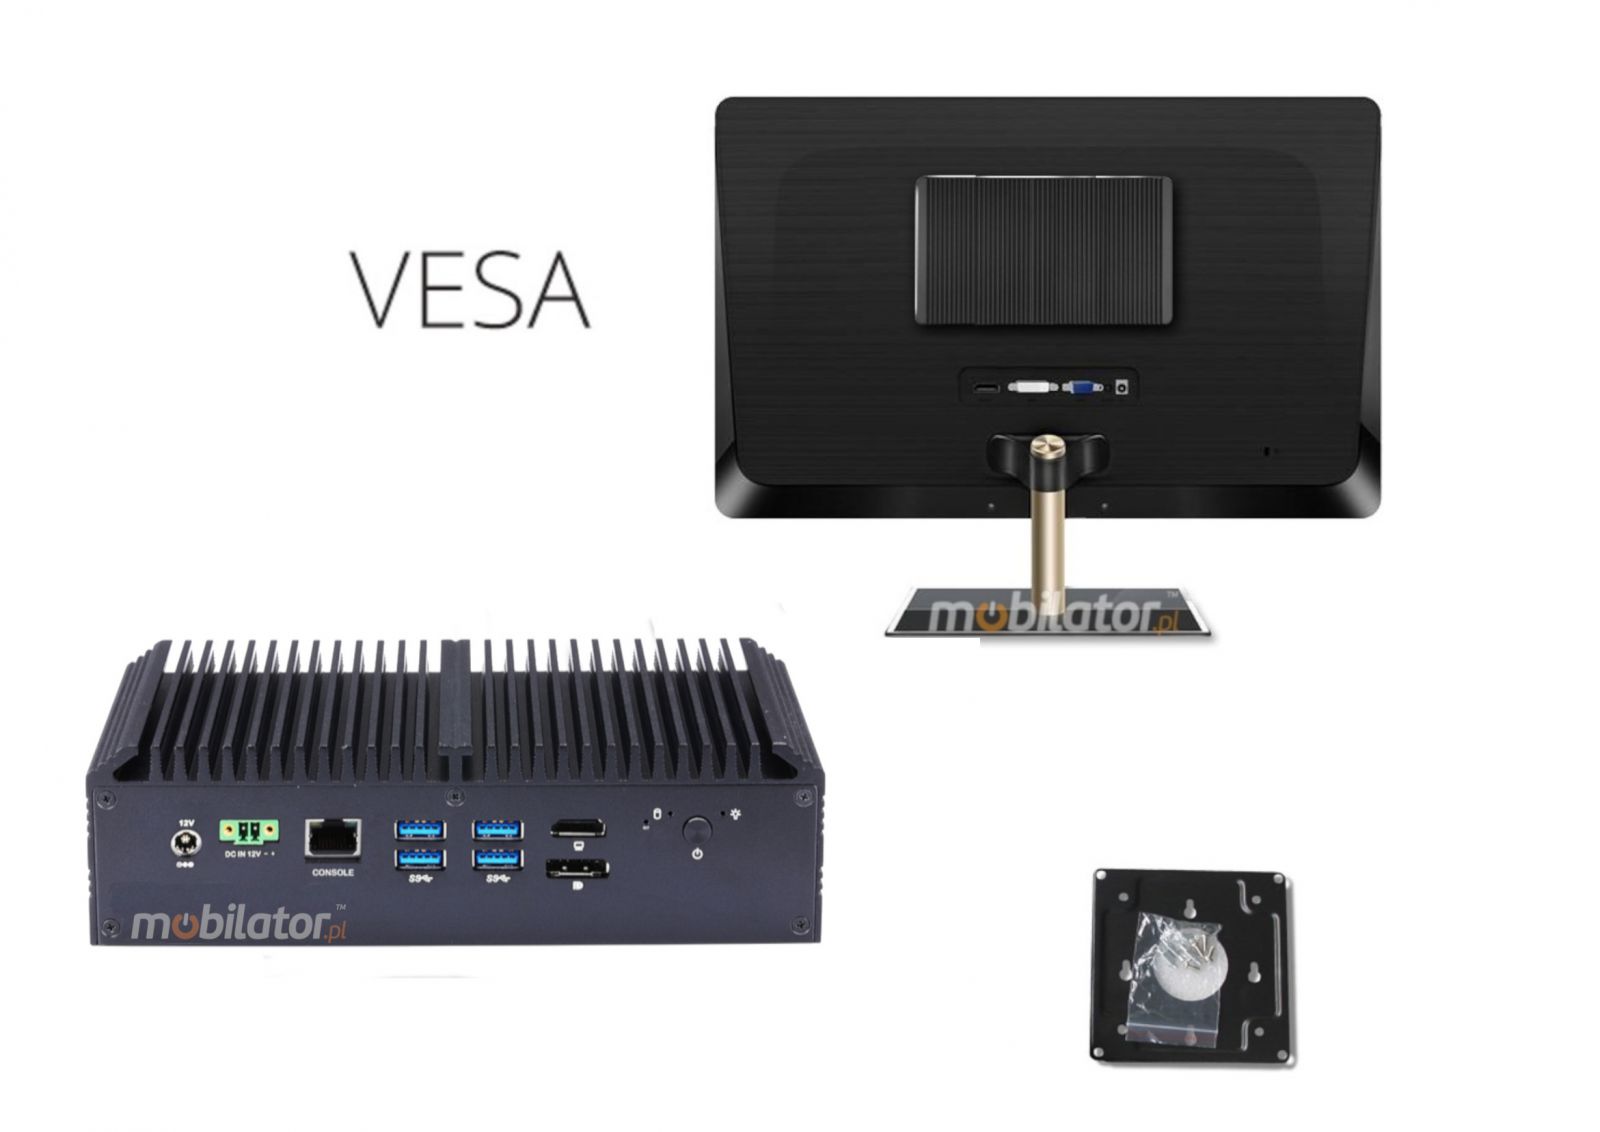 funkcjonalny uchwyt VESA wraz z Q1012GE